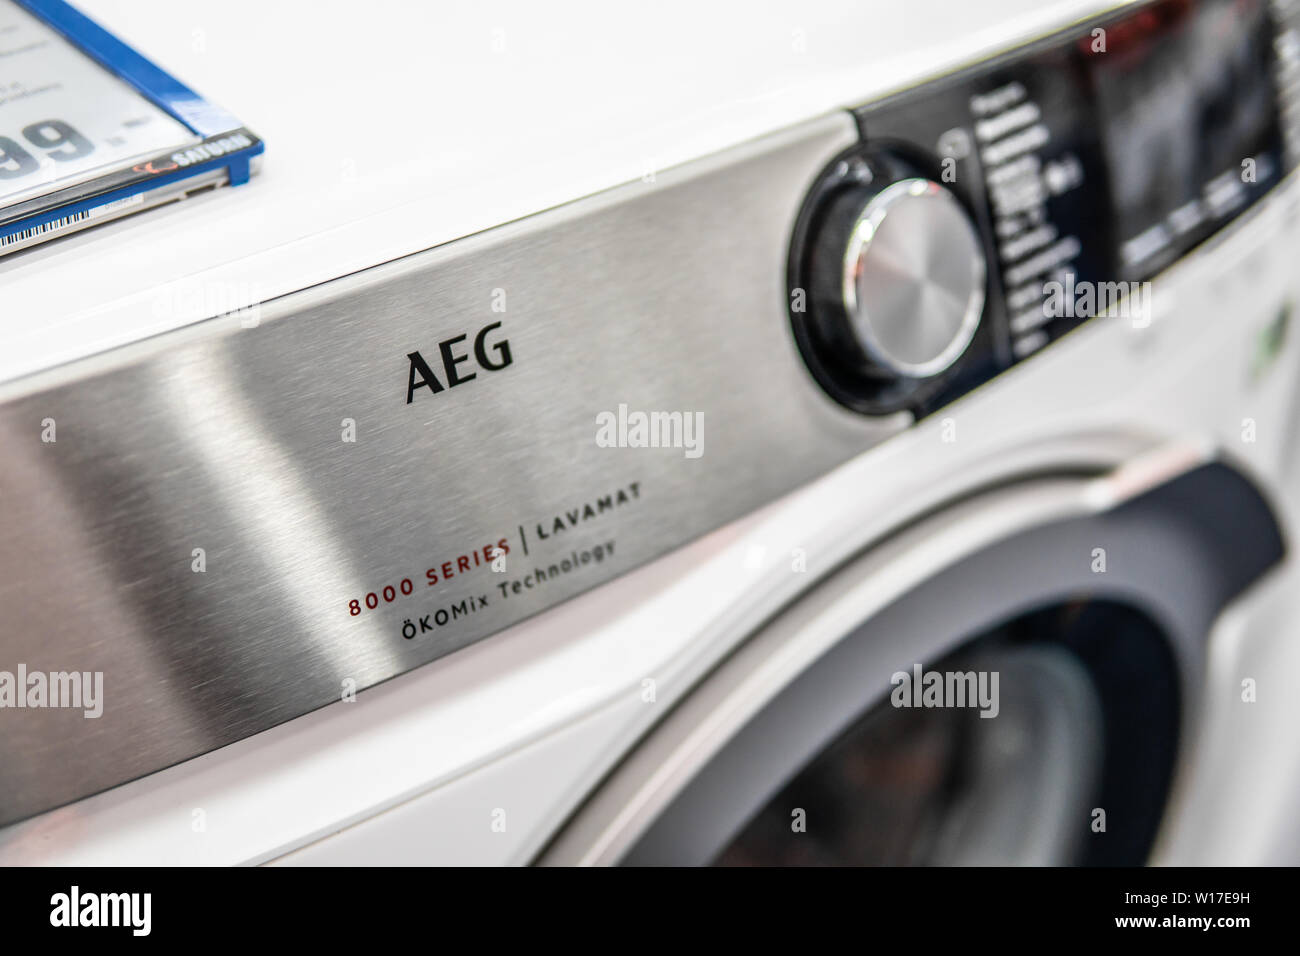 Lodz, Poland, July 2018 inside Saturn electronic store, free-standing AEG washing machine on display for sale, logo, brand name AEG Stock Photo